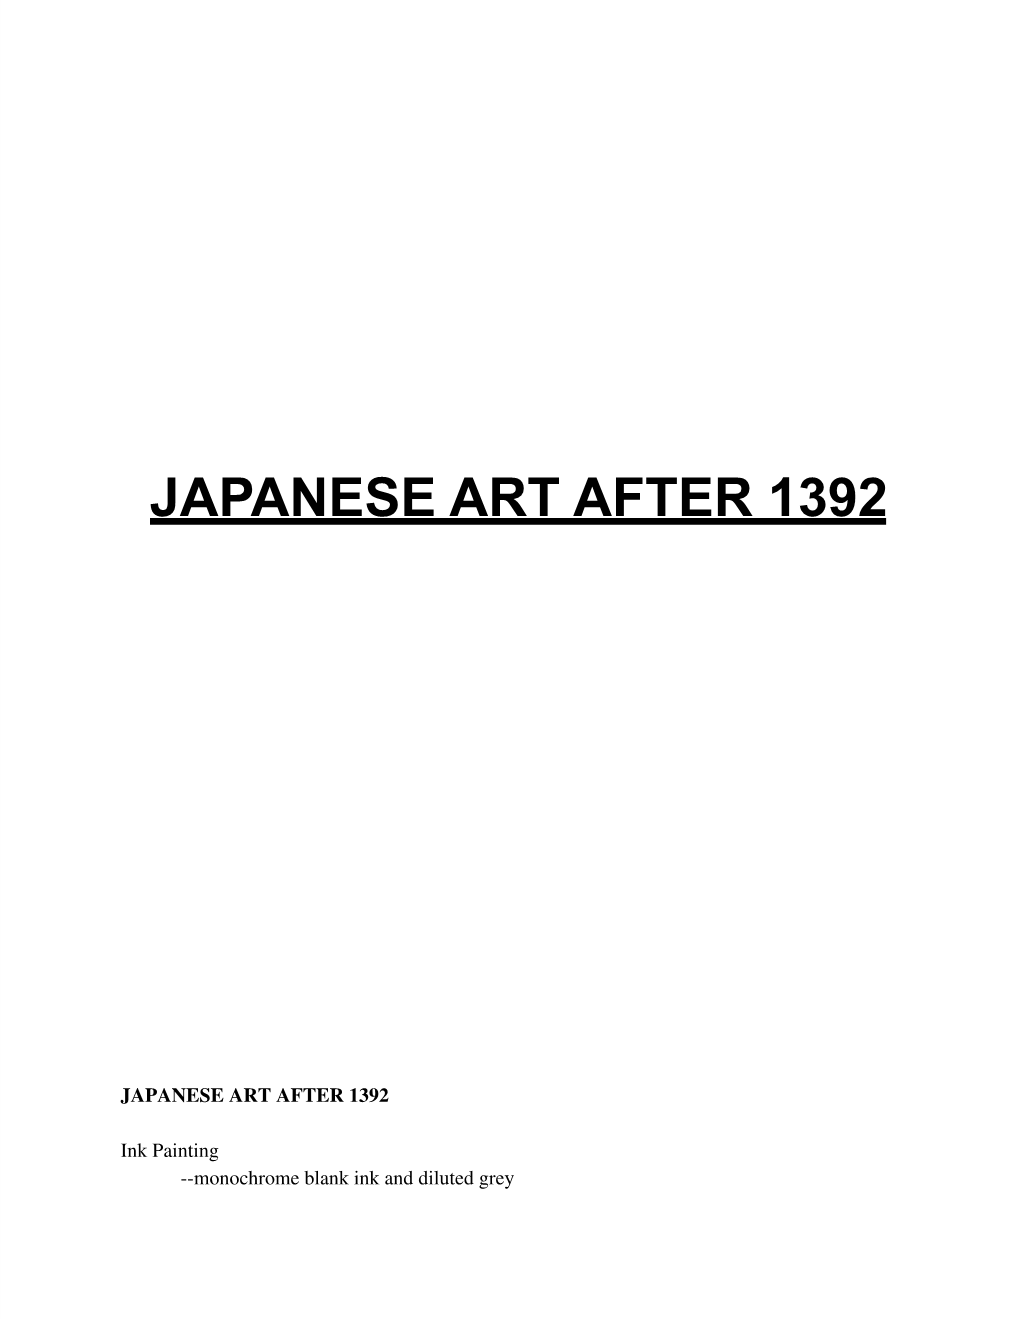 Japanese Art After 1392